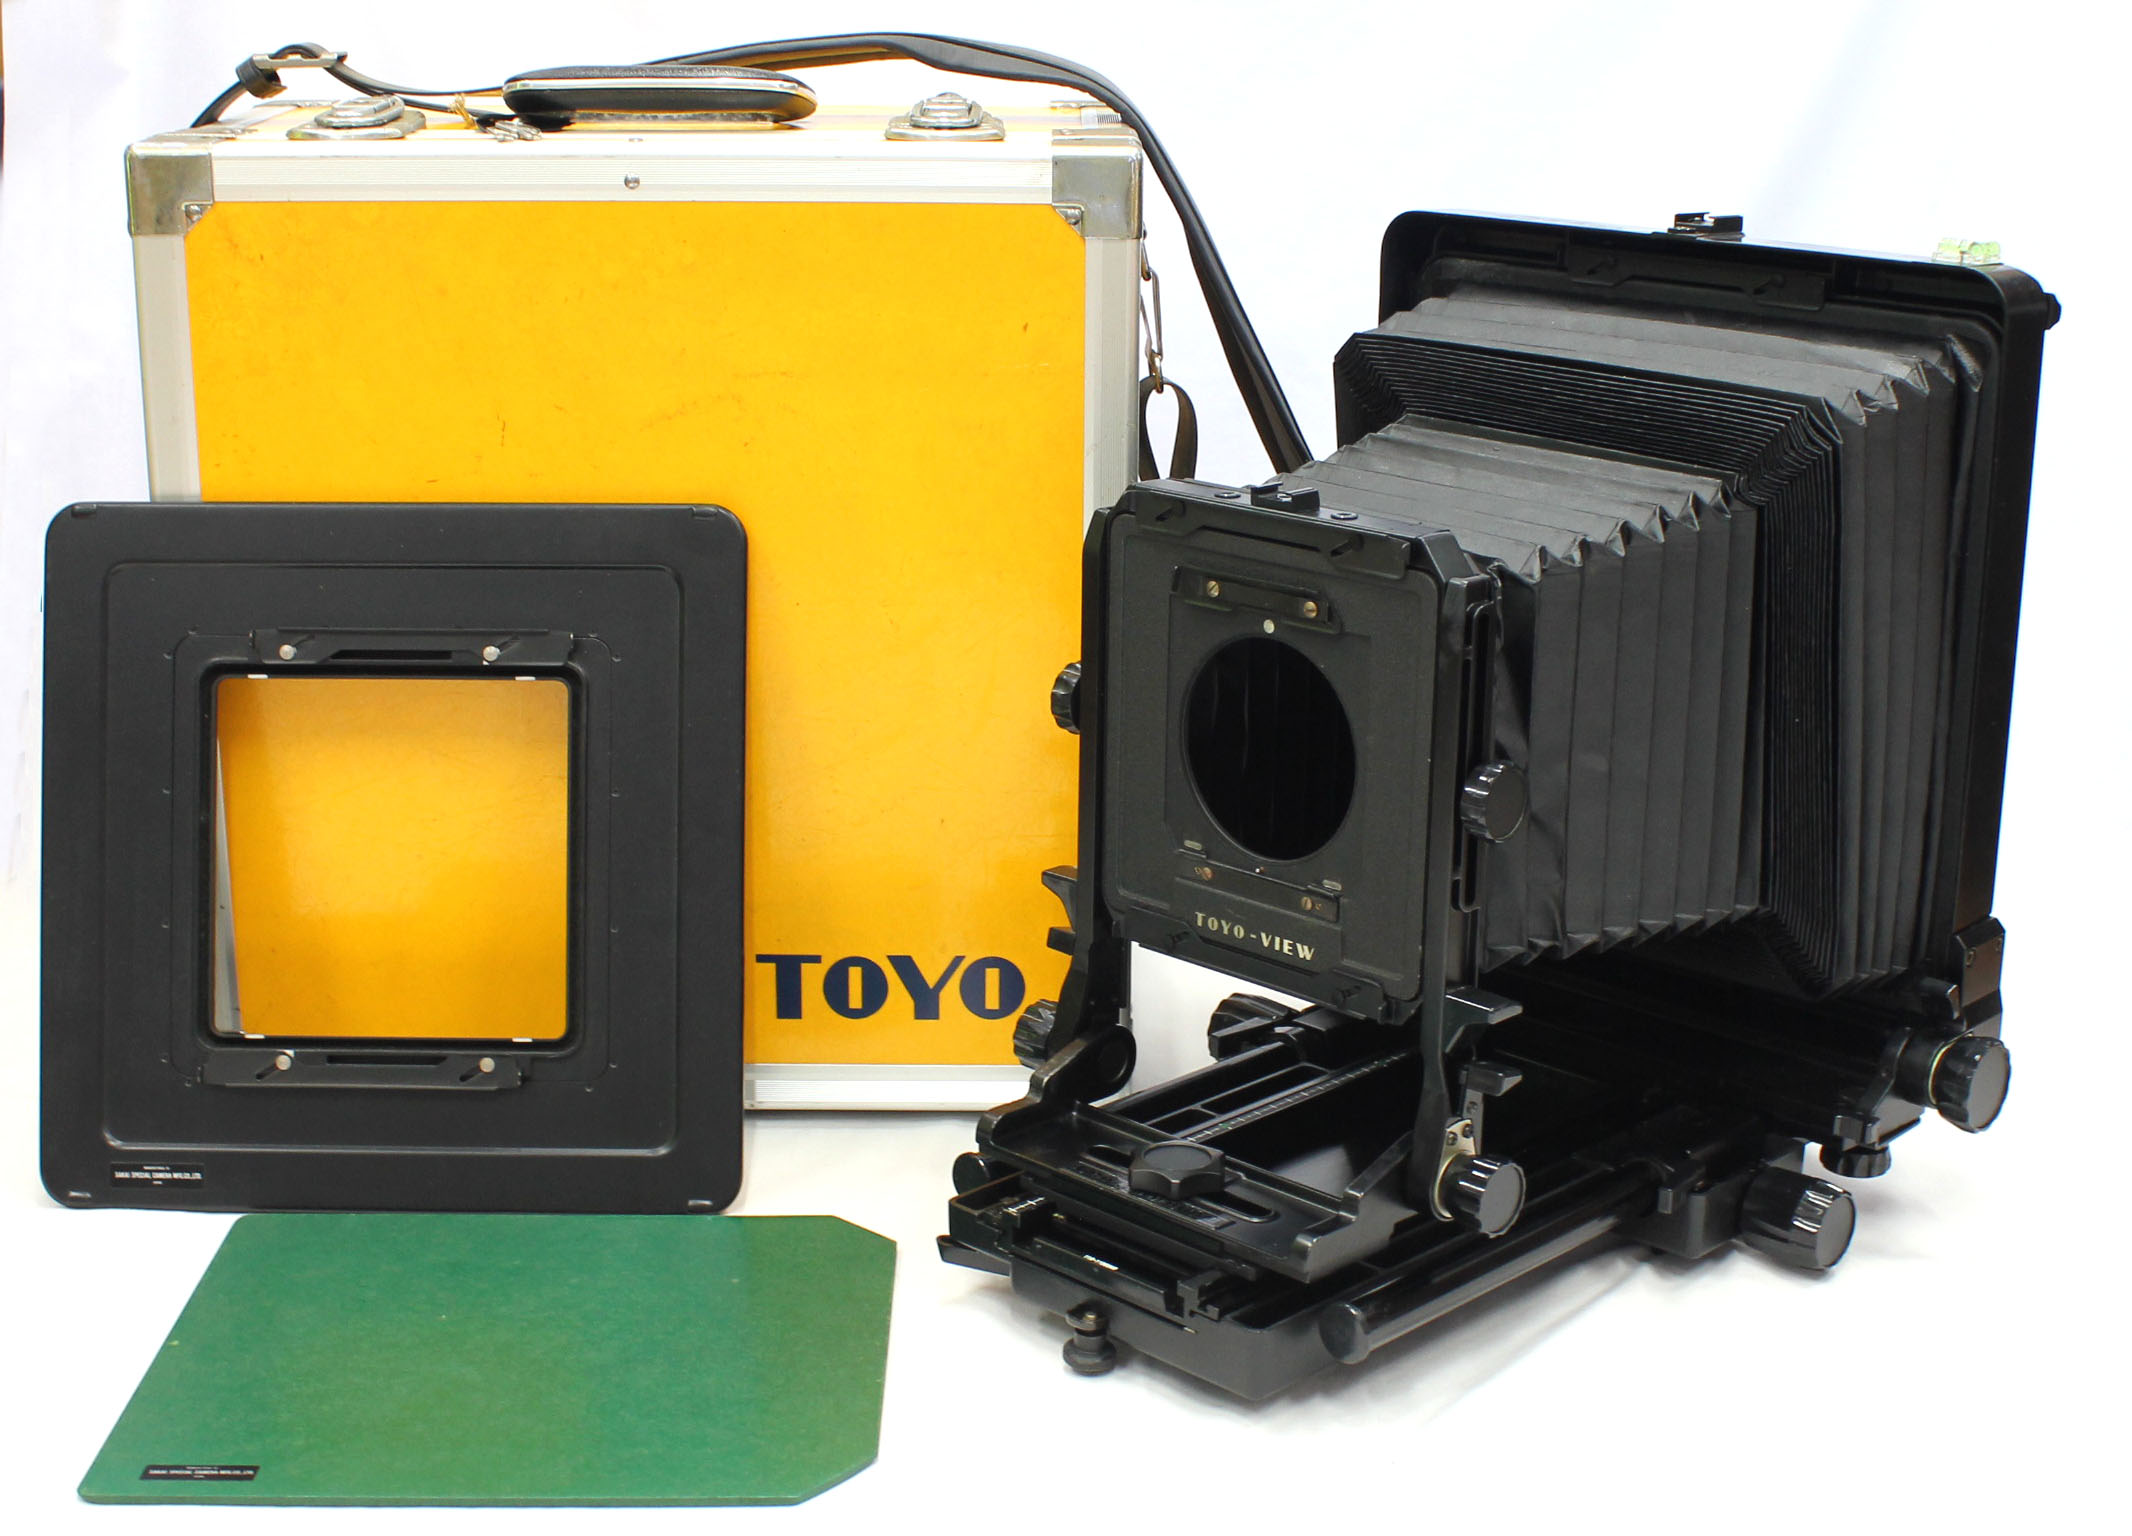 Toyo Field 810M II 8x10 Large Format Camera with Linhof Board Adapter in Toyo Case from Japan